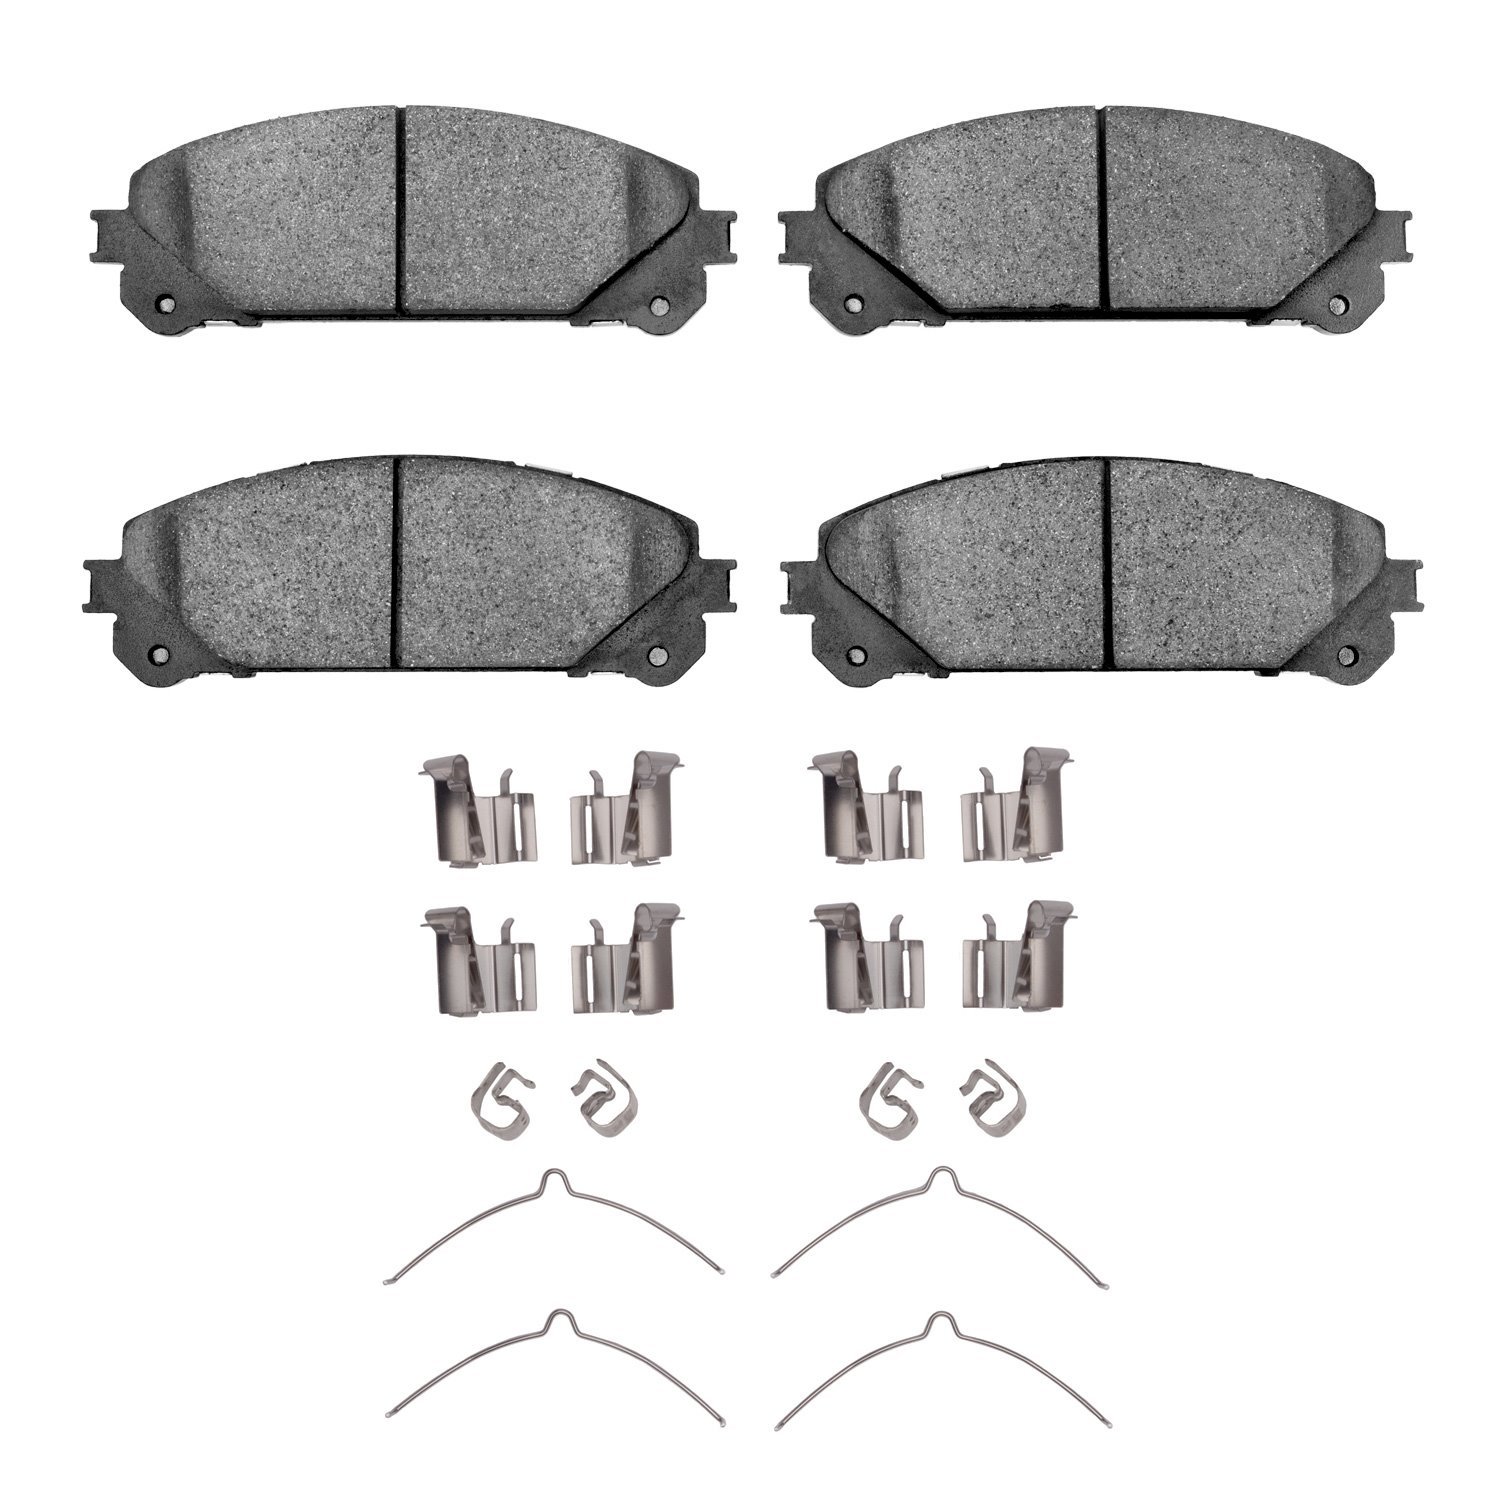 1551-1324-01 5000 Advanced Ceramic Brake Pads & Hardware Kit, Fits Select Multiple Makes/Models, Position: Front